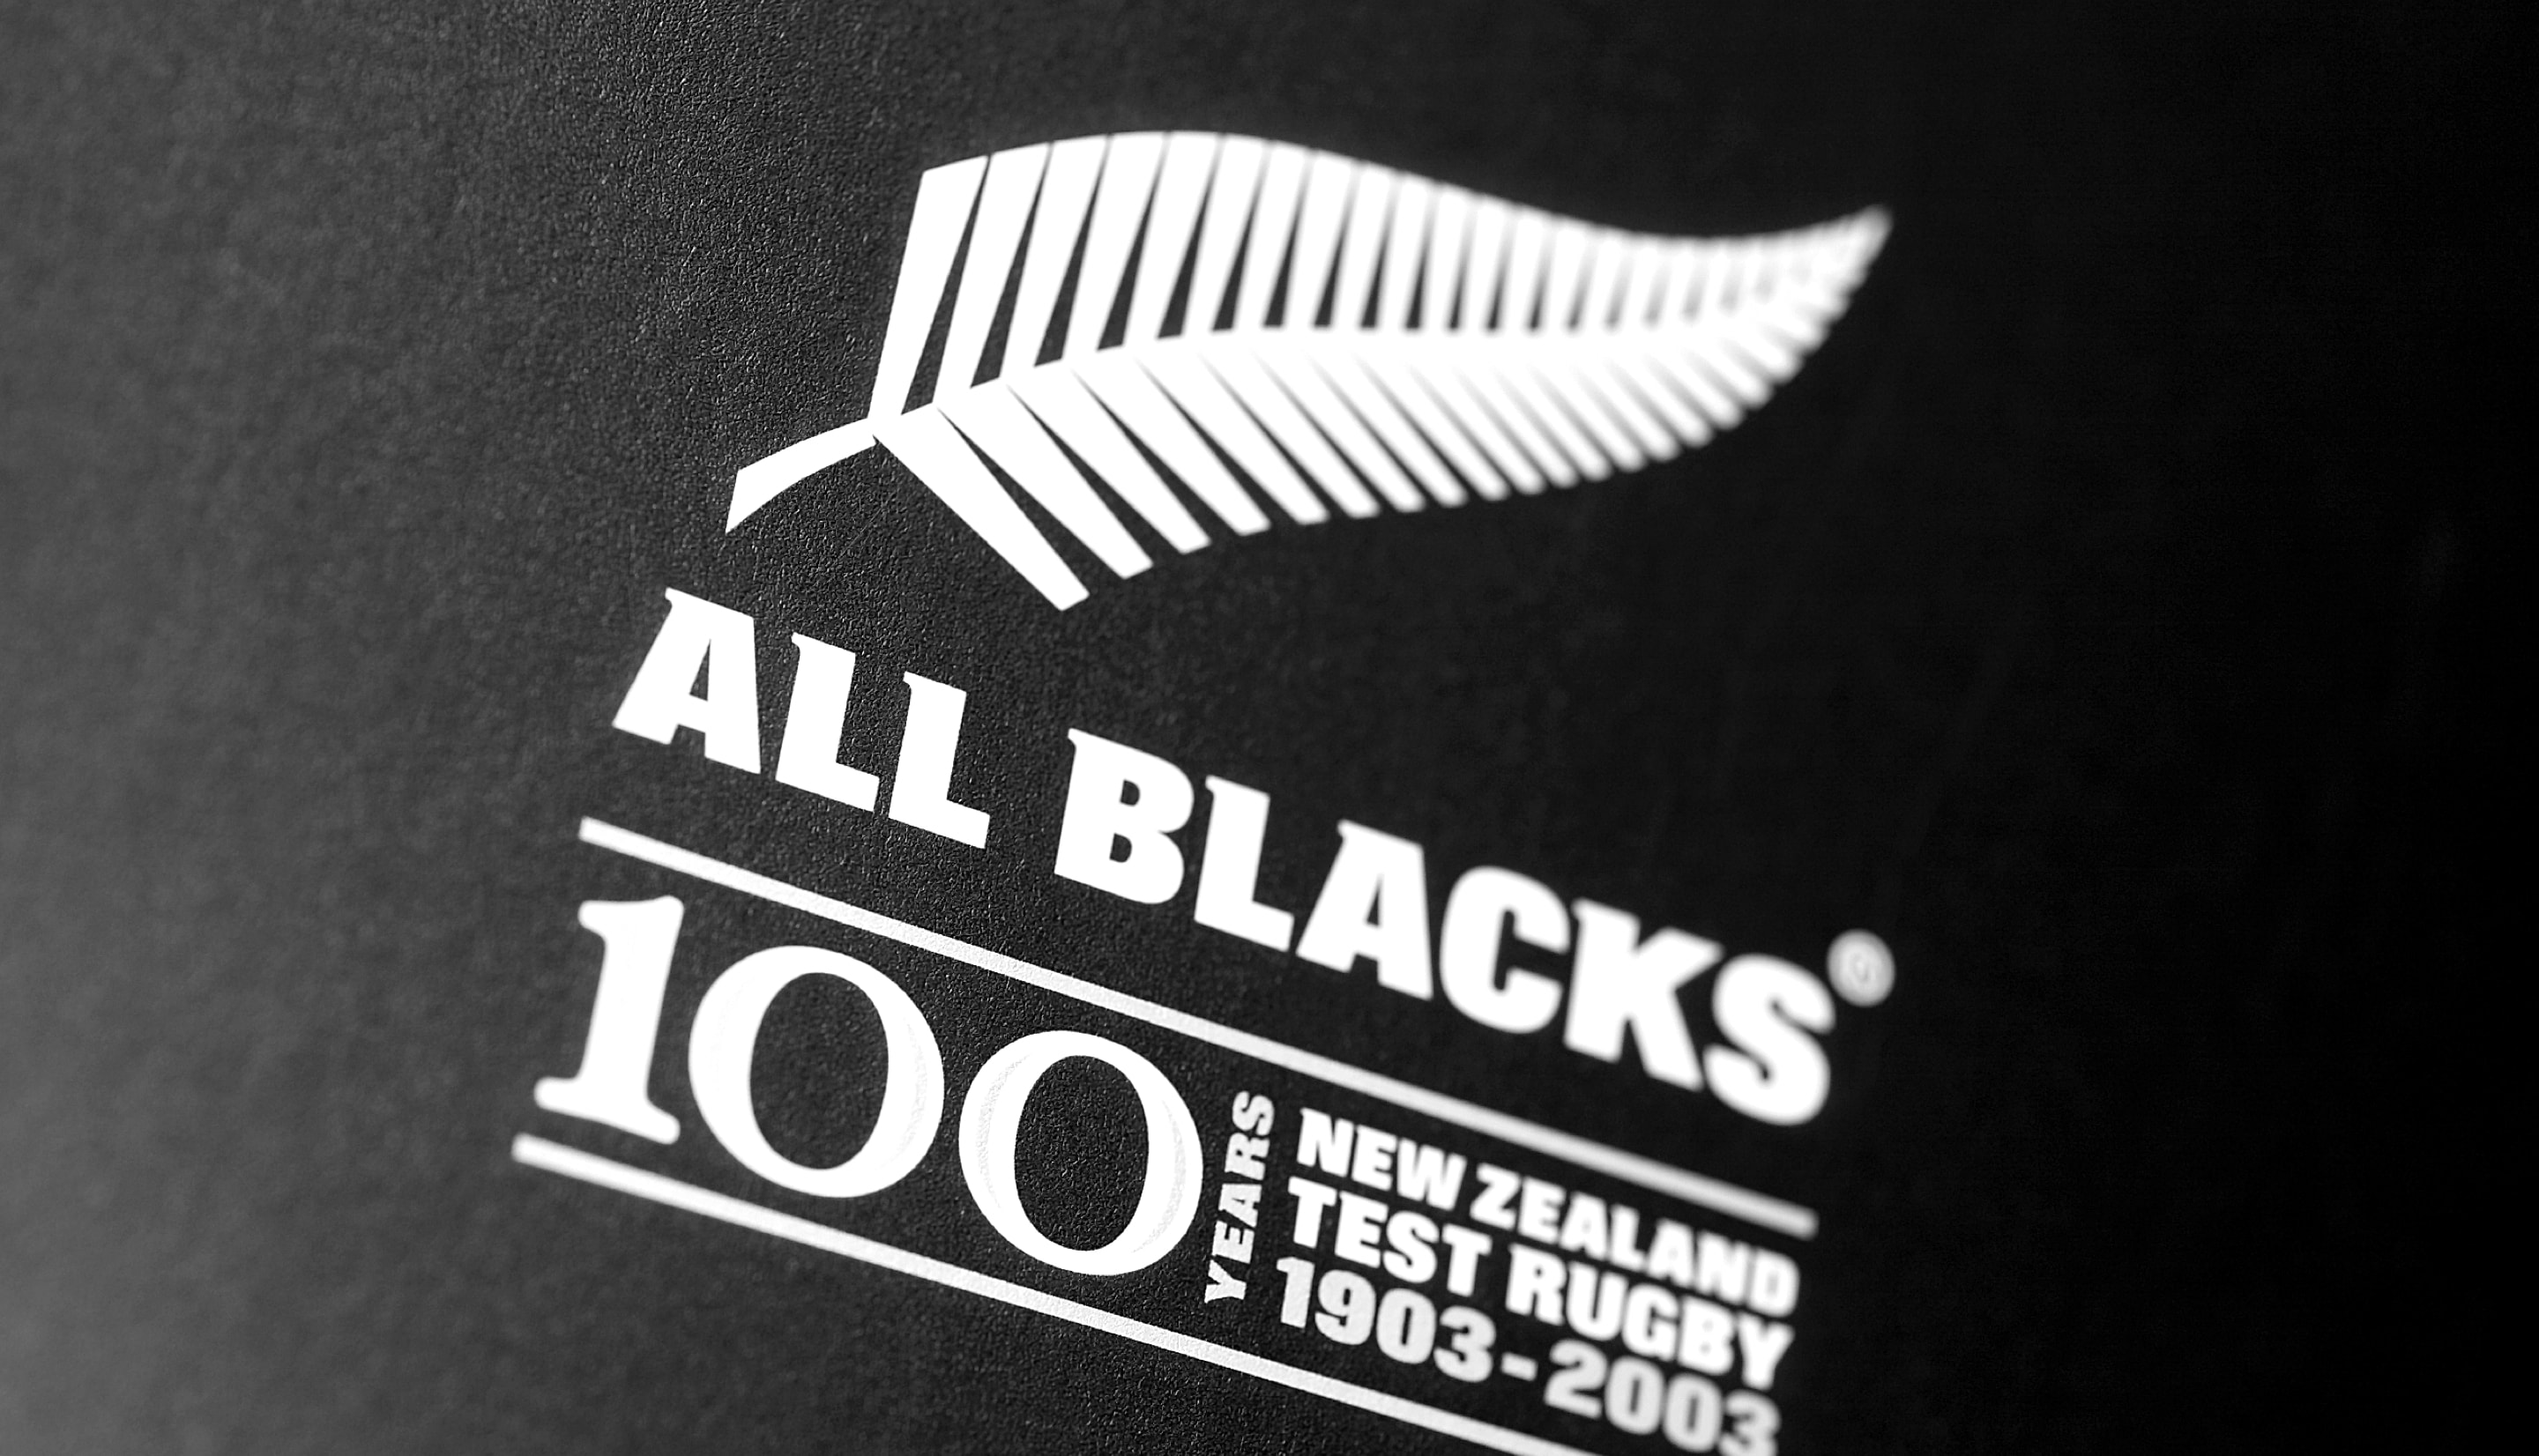 All Blacks 100 years